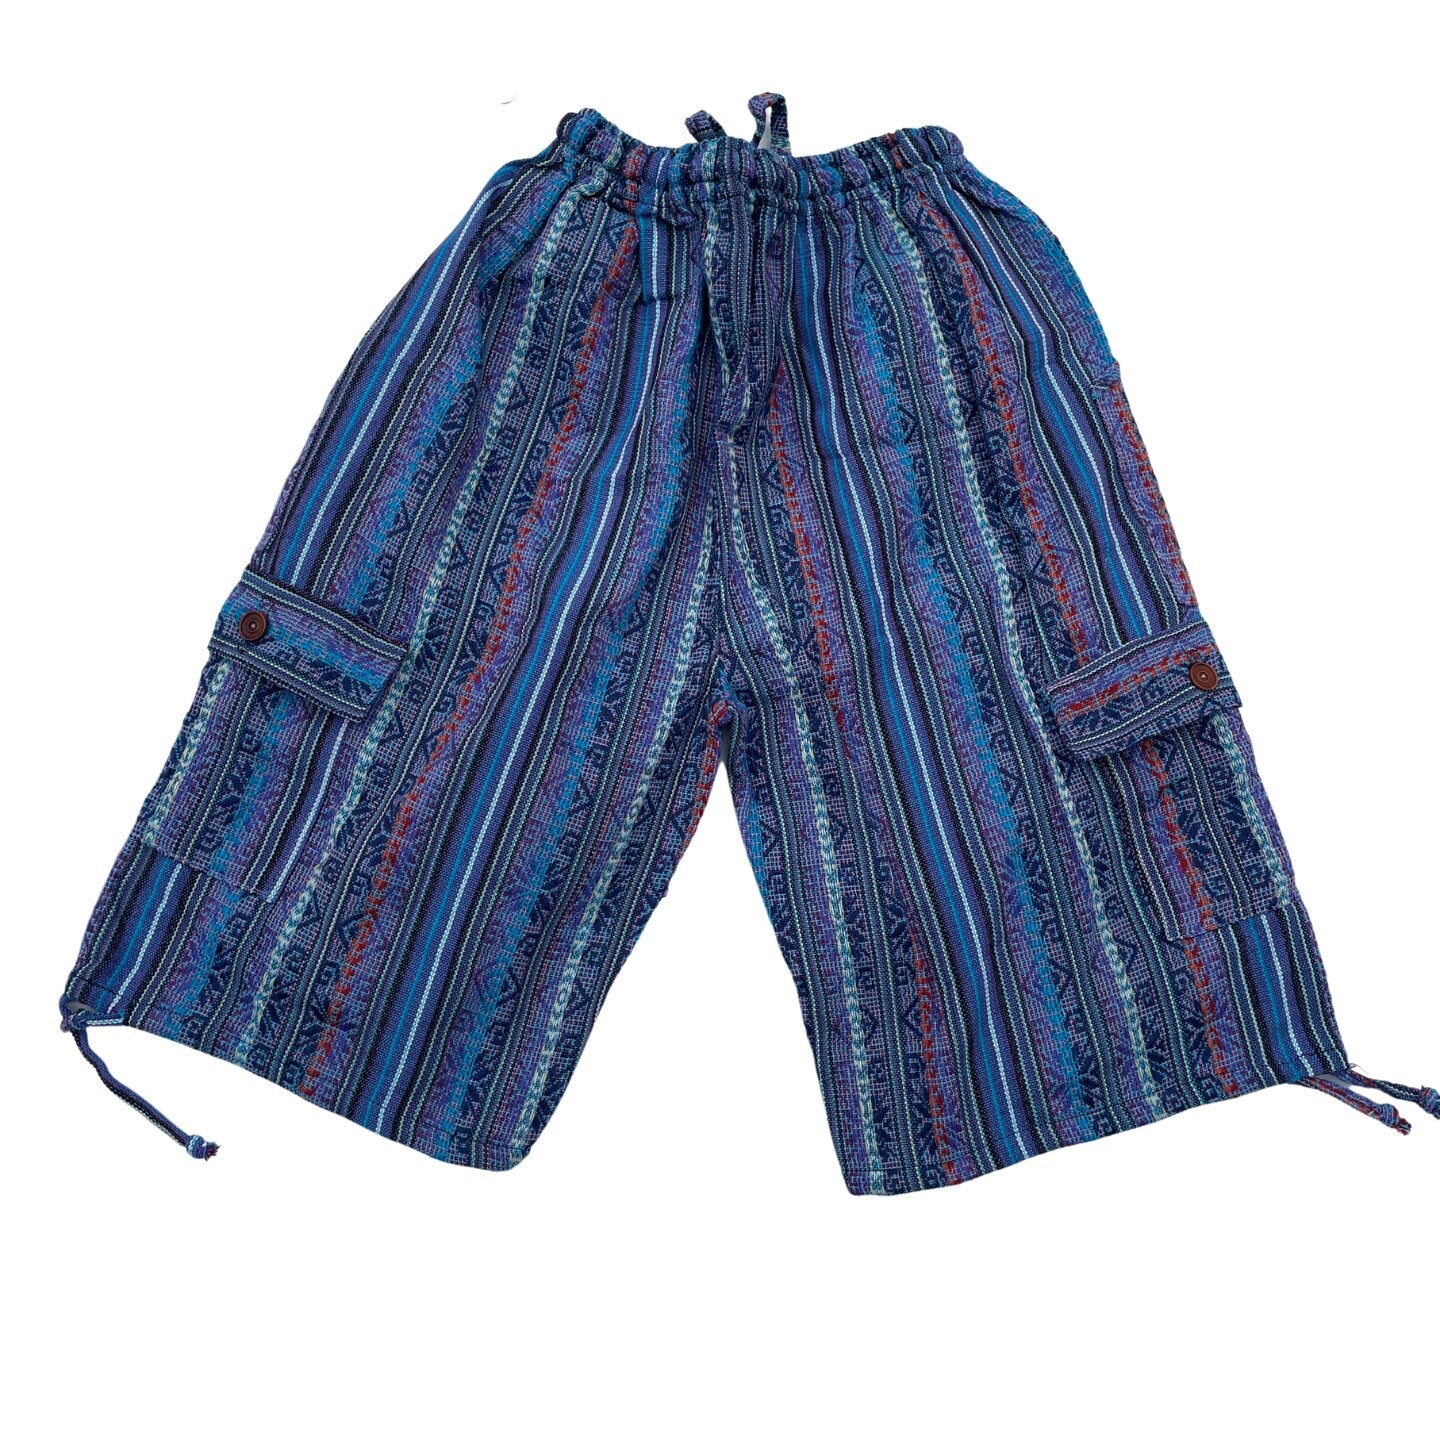 Unisex Woven Boho Cargo Shorts Size L | Hippie Shorts | Tribal Shorts | Blue Perennial Lilac